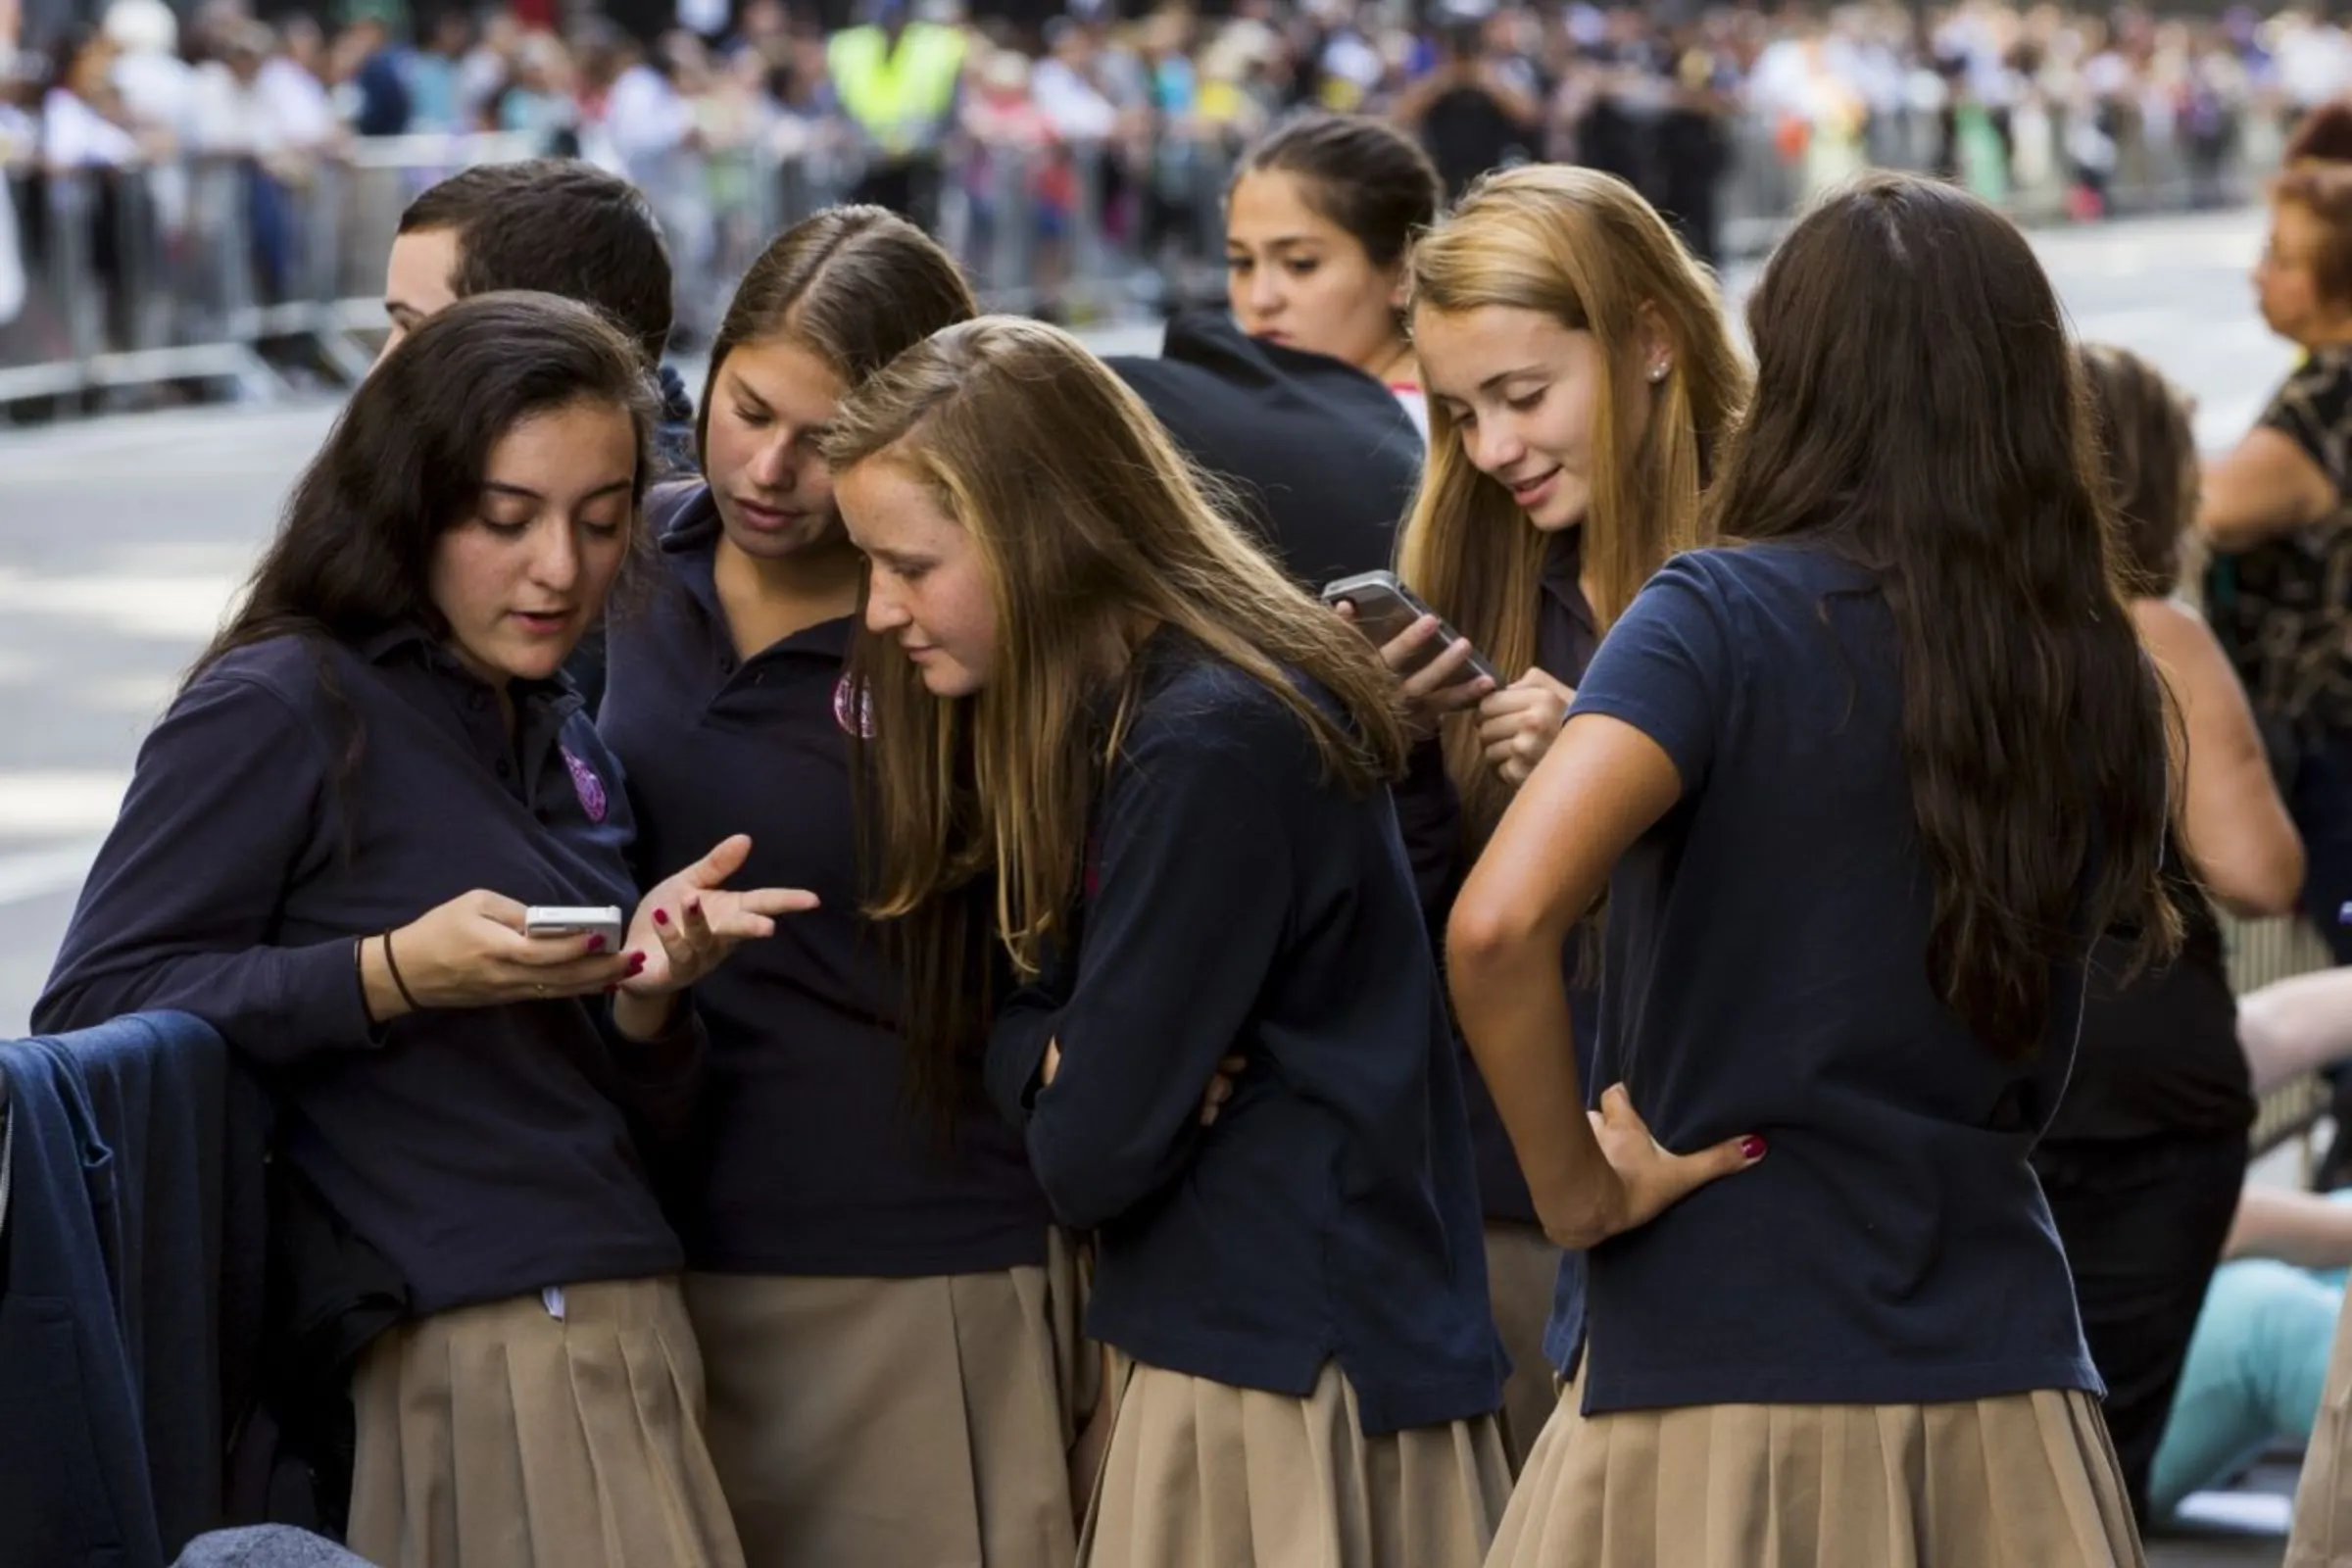 A group of school girls look at their phones in New York September 24, 2015. REUTERS/Lucas Jackson